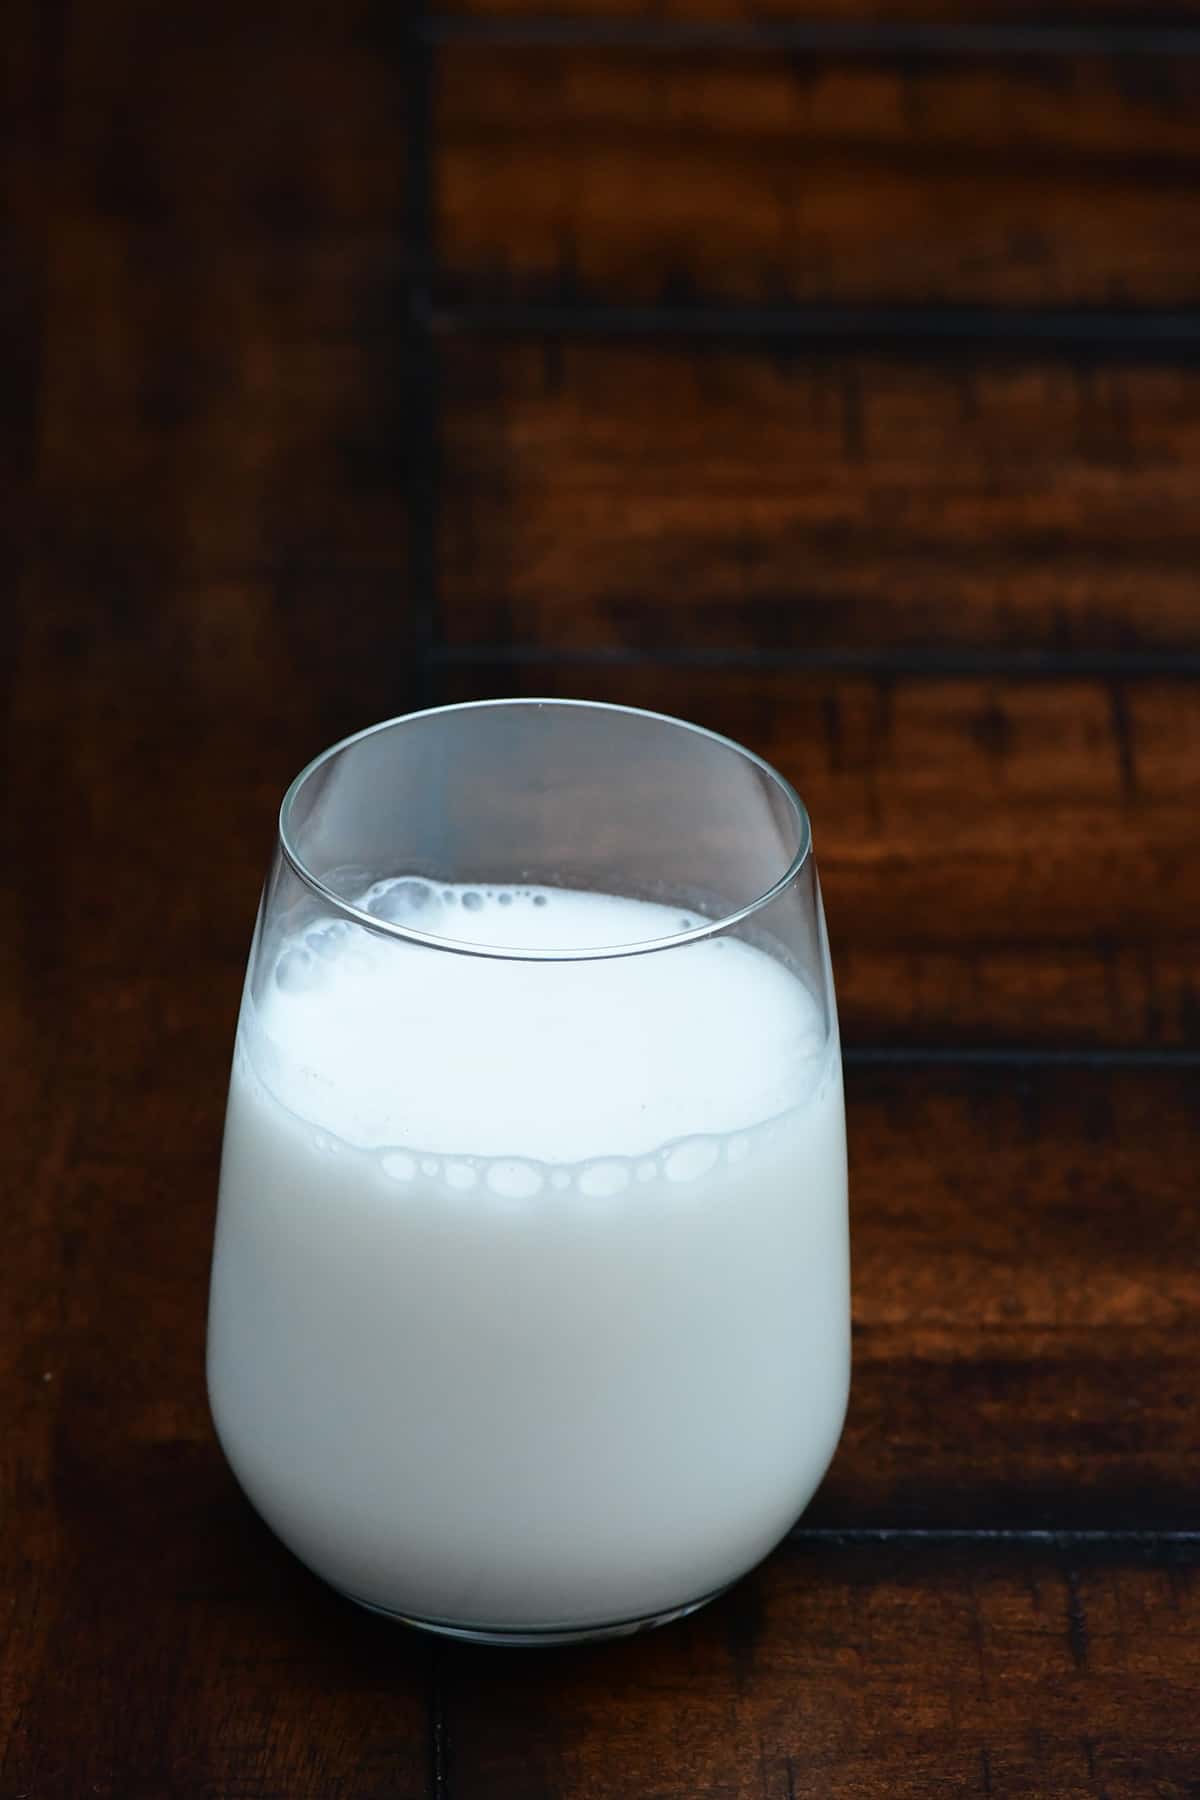 Glass of milk sitting on a dark wood table.